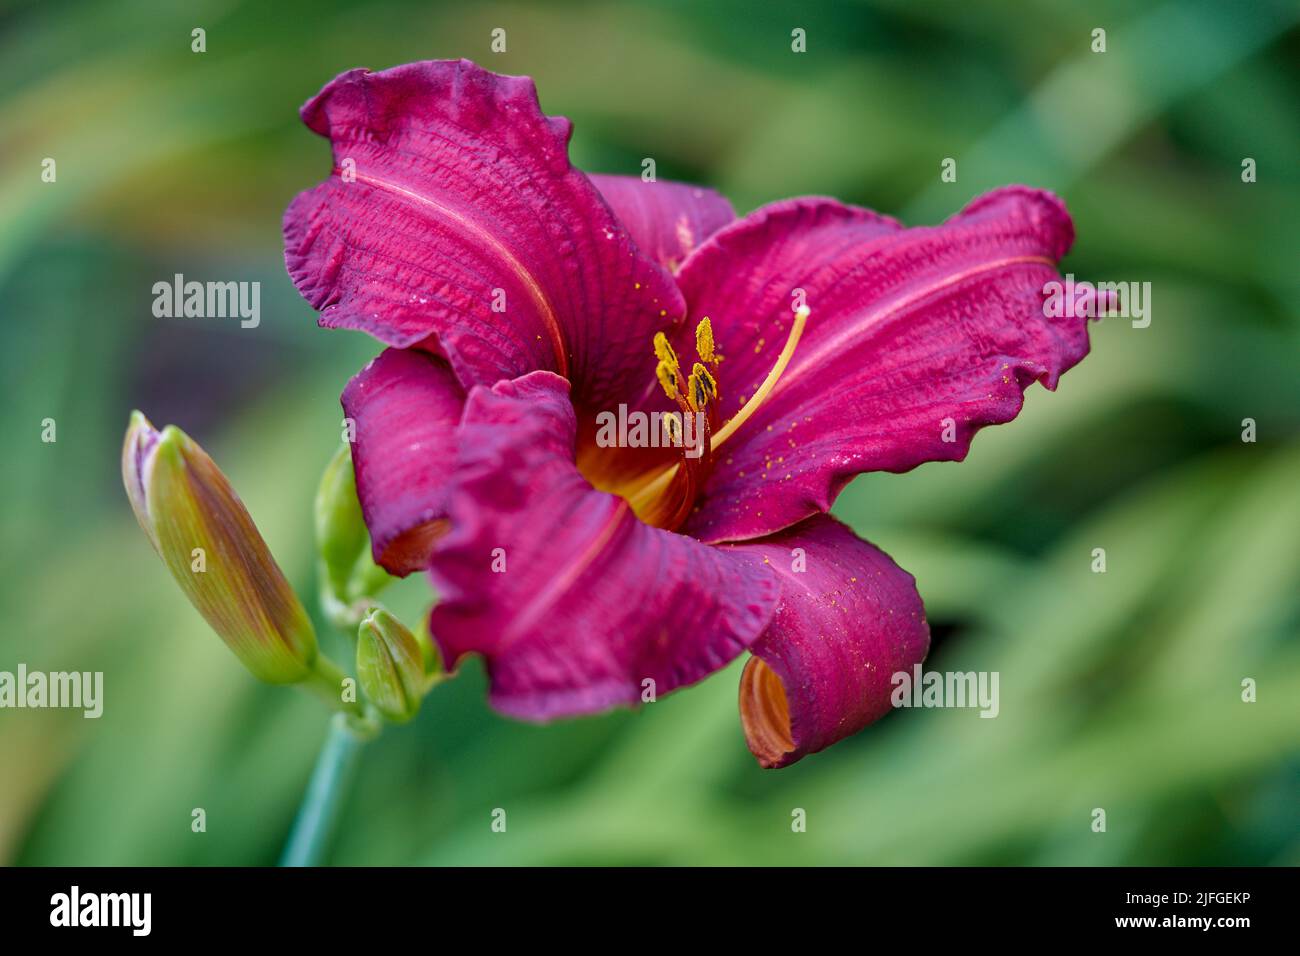 Colorfull day lily flower close up Hemerocallis Stock Photo